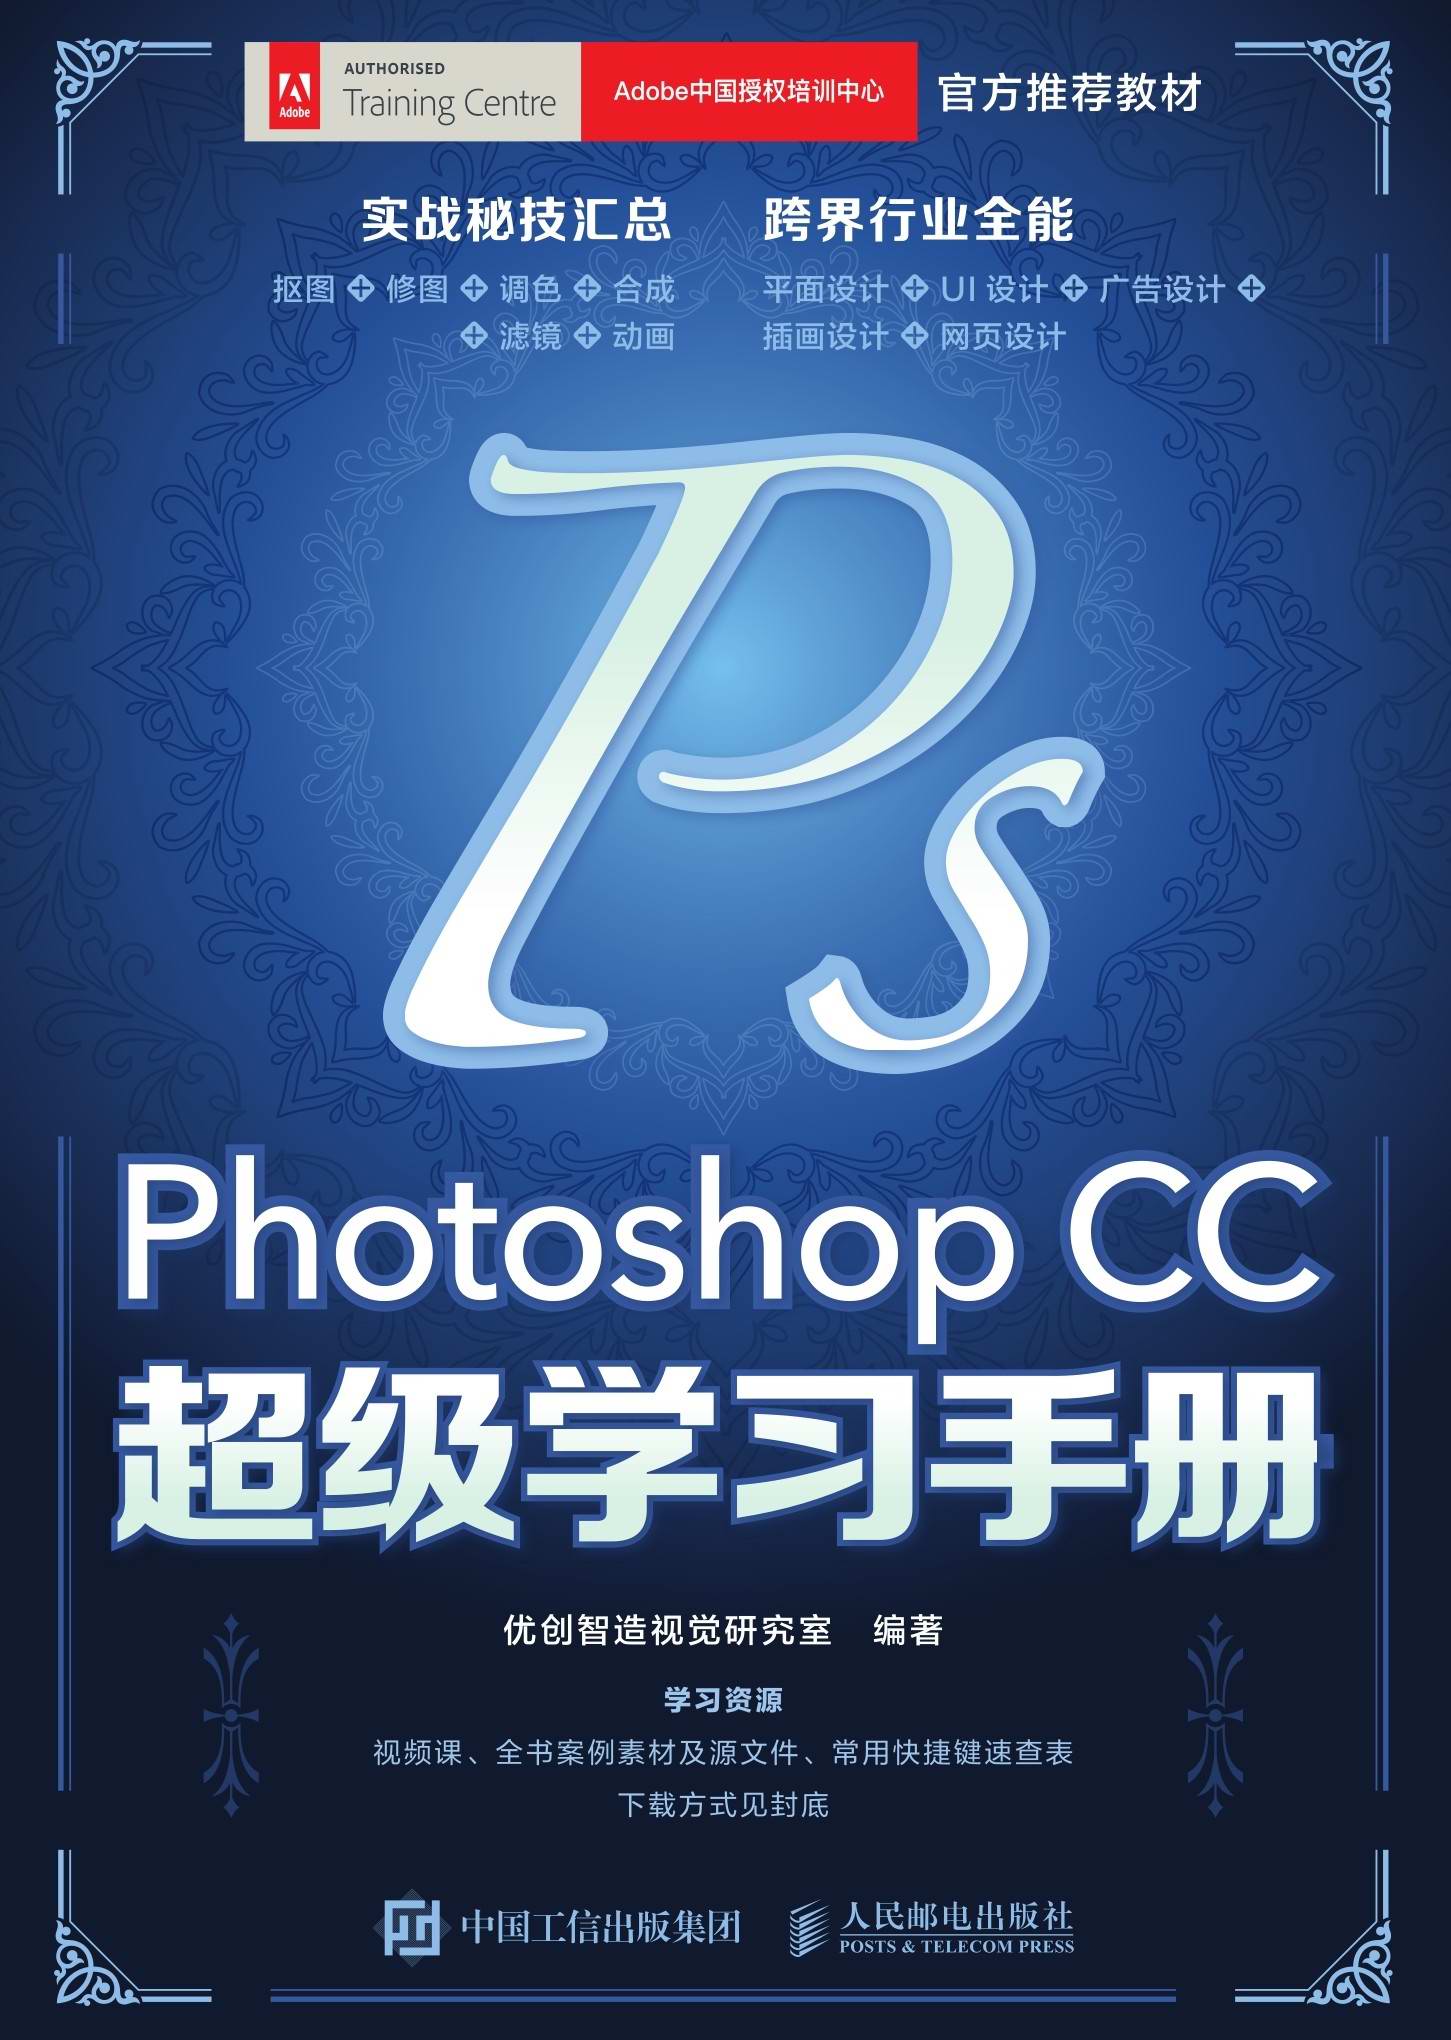 Photoshop CC超级学习手册